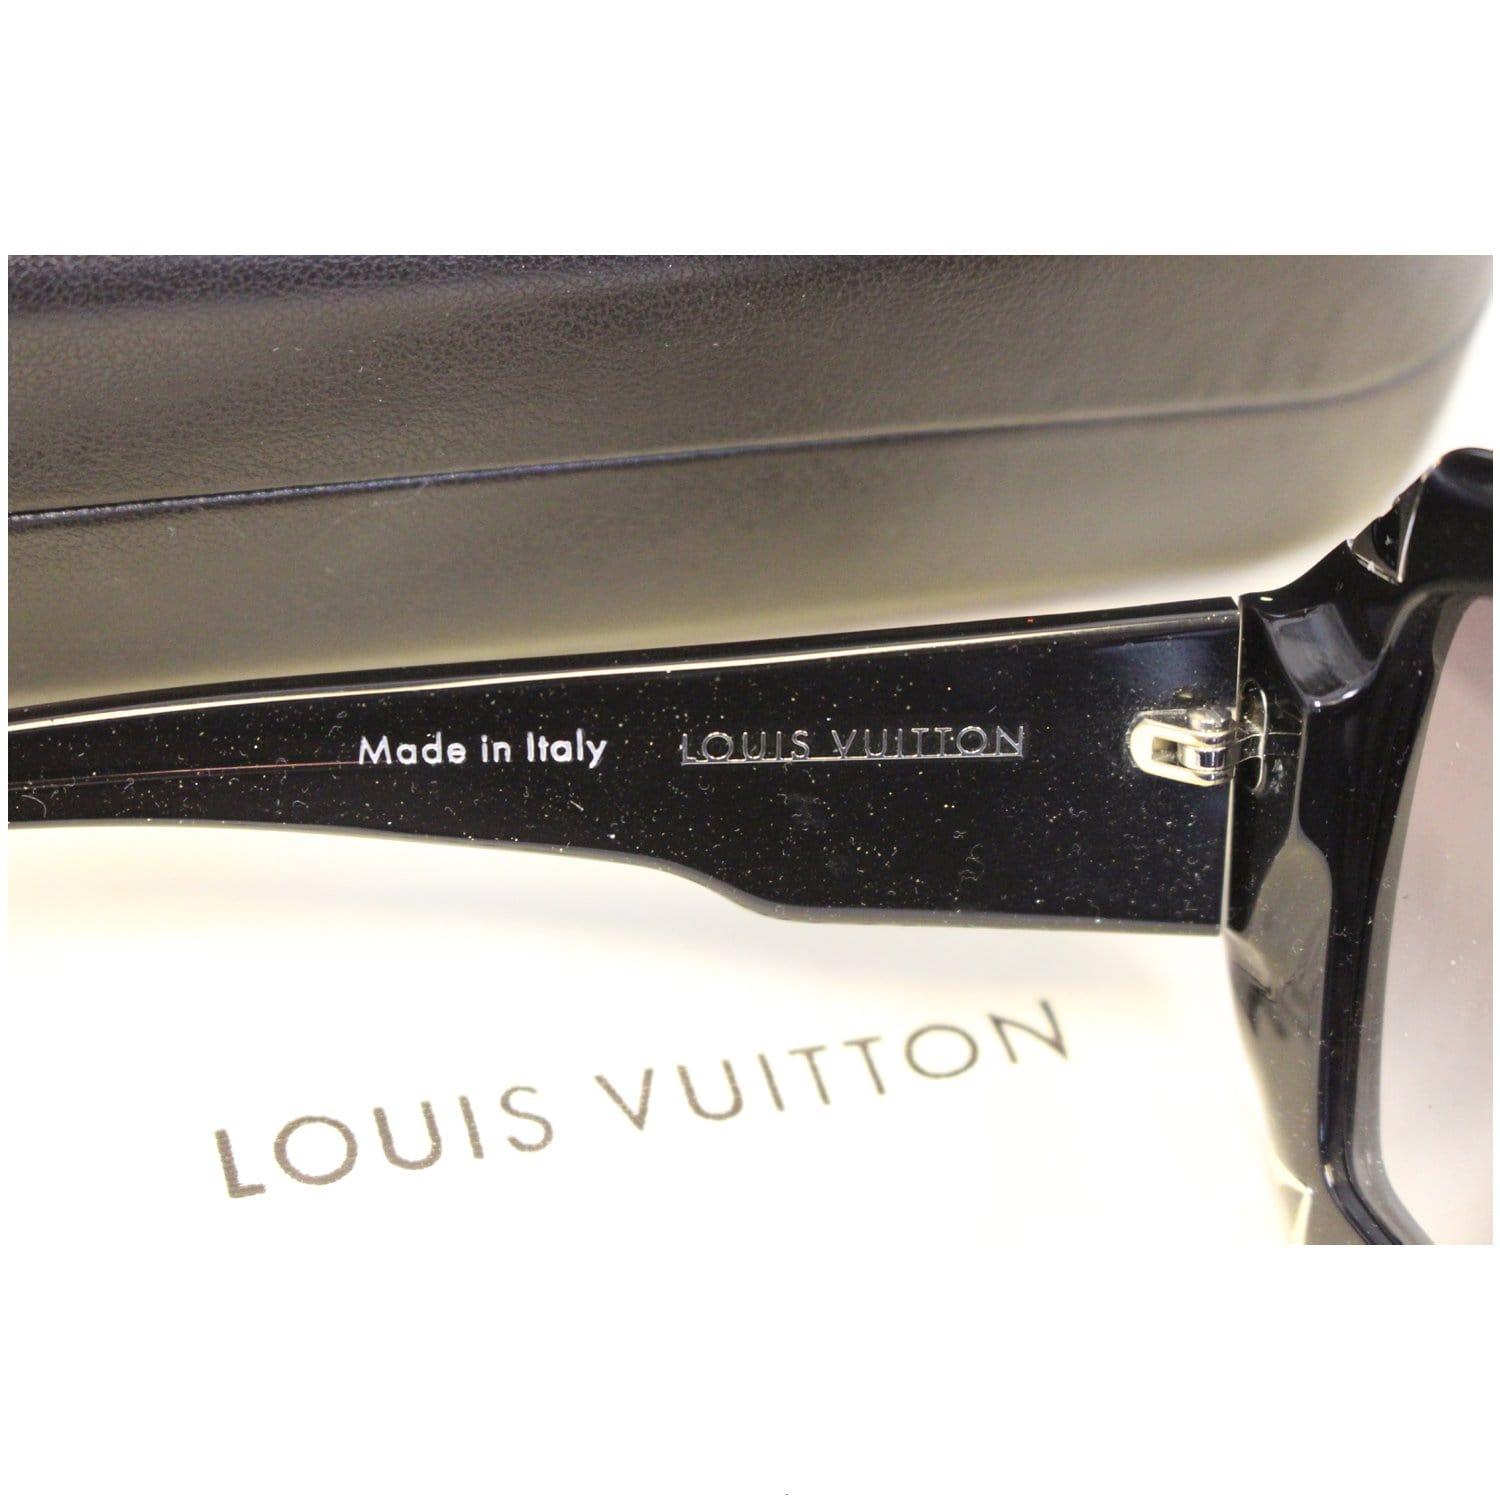 LOUIS VUITTON Hortensia Sunglasses Black-US